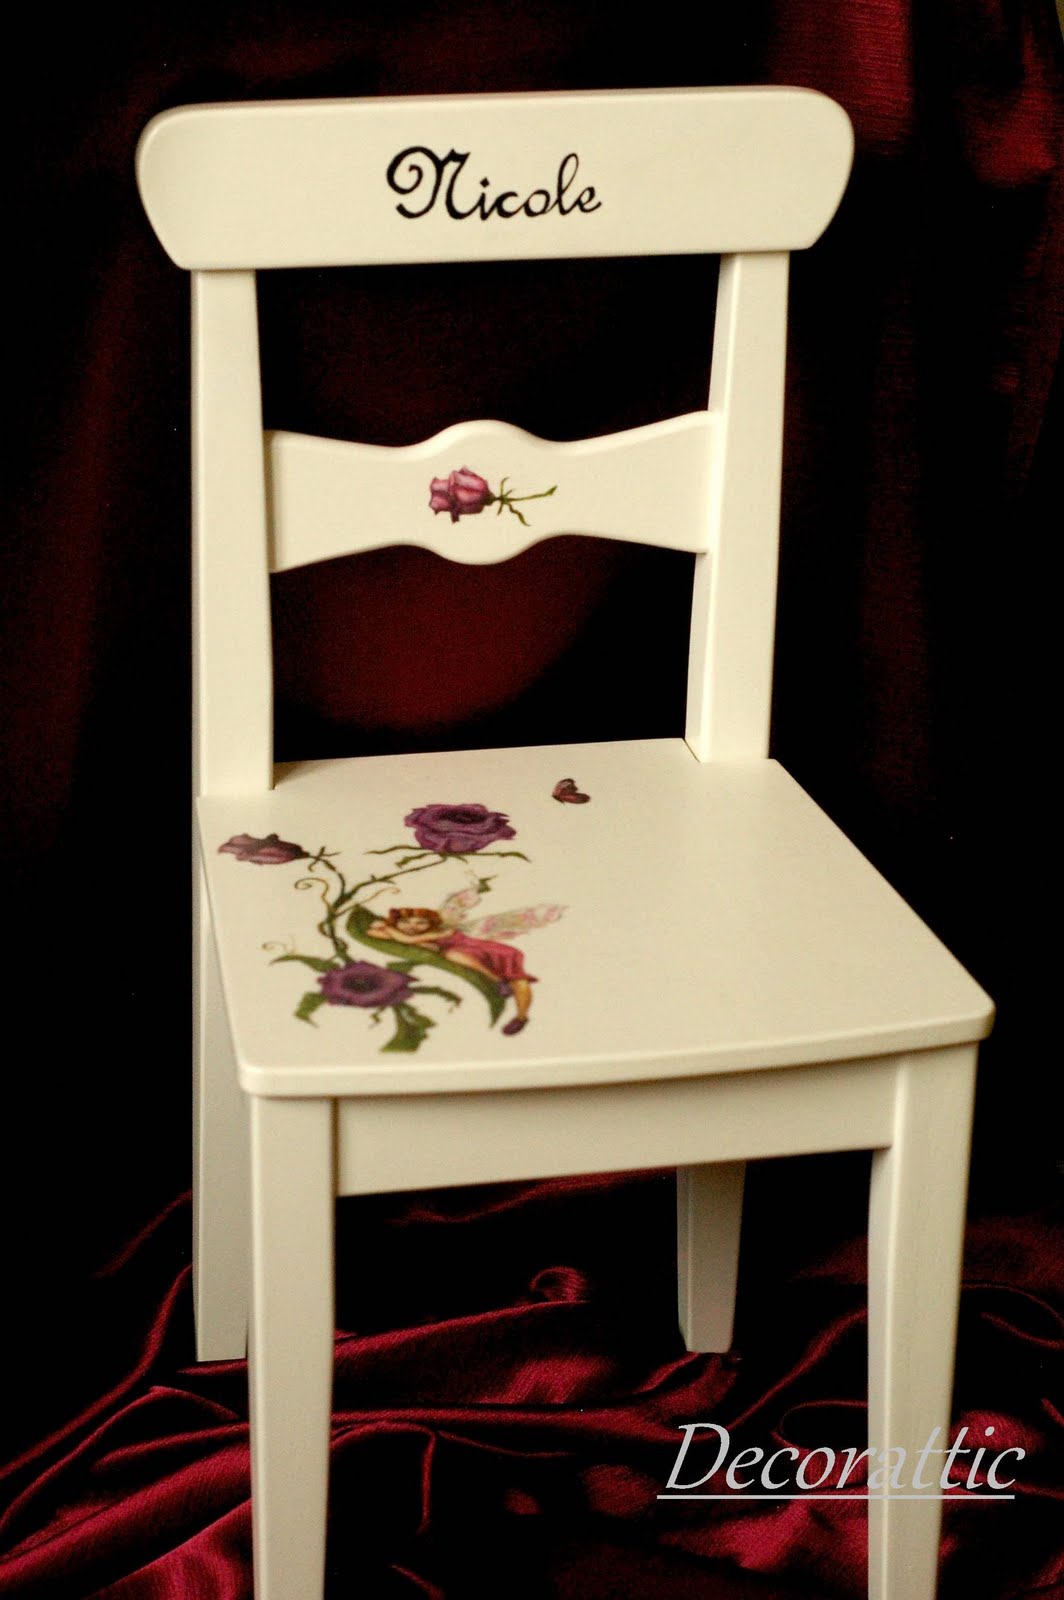 Decorattic: Fairy chair, decoupage